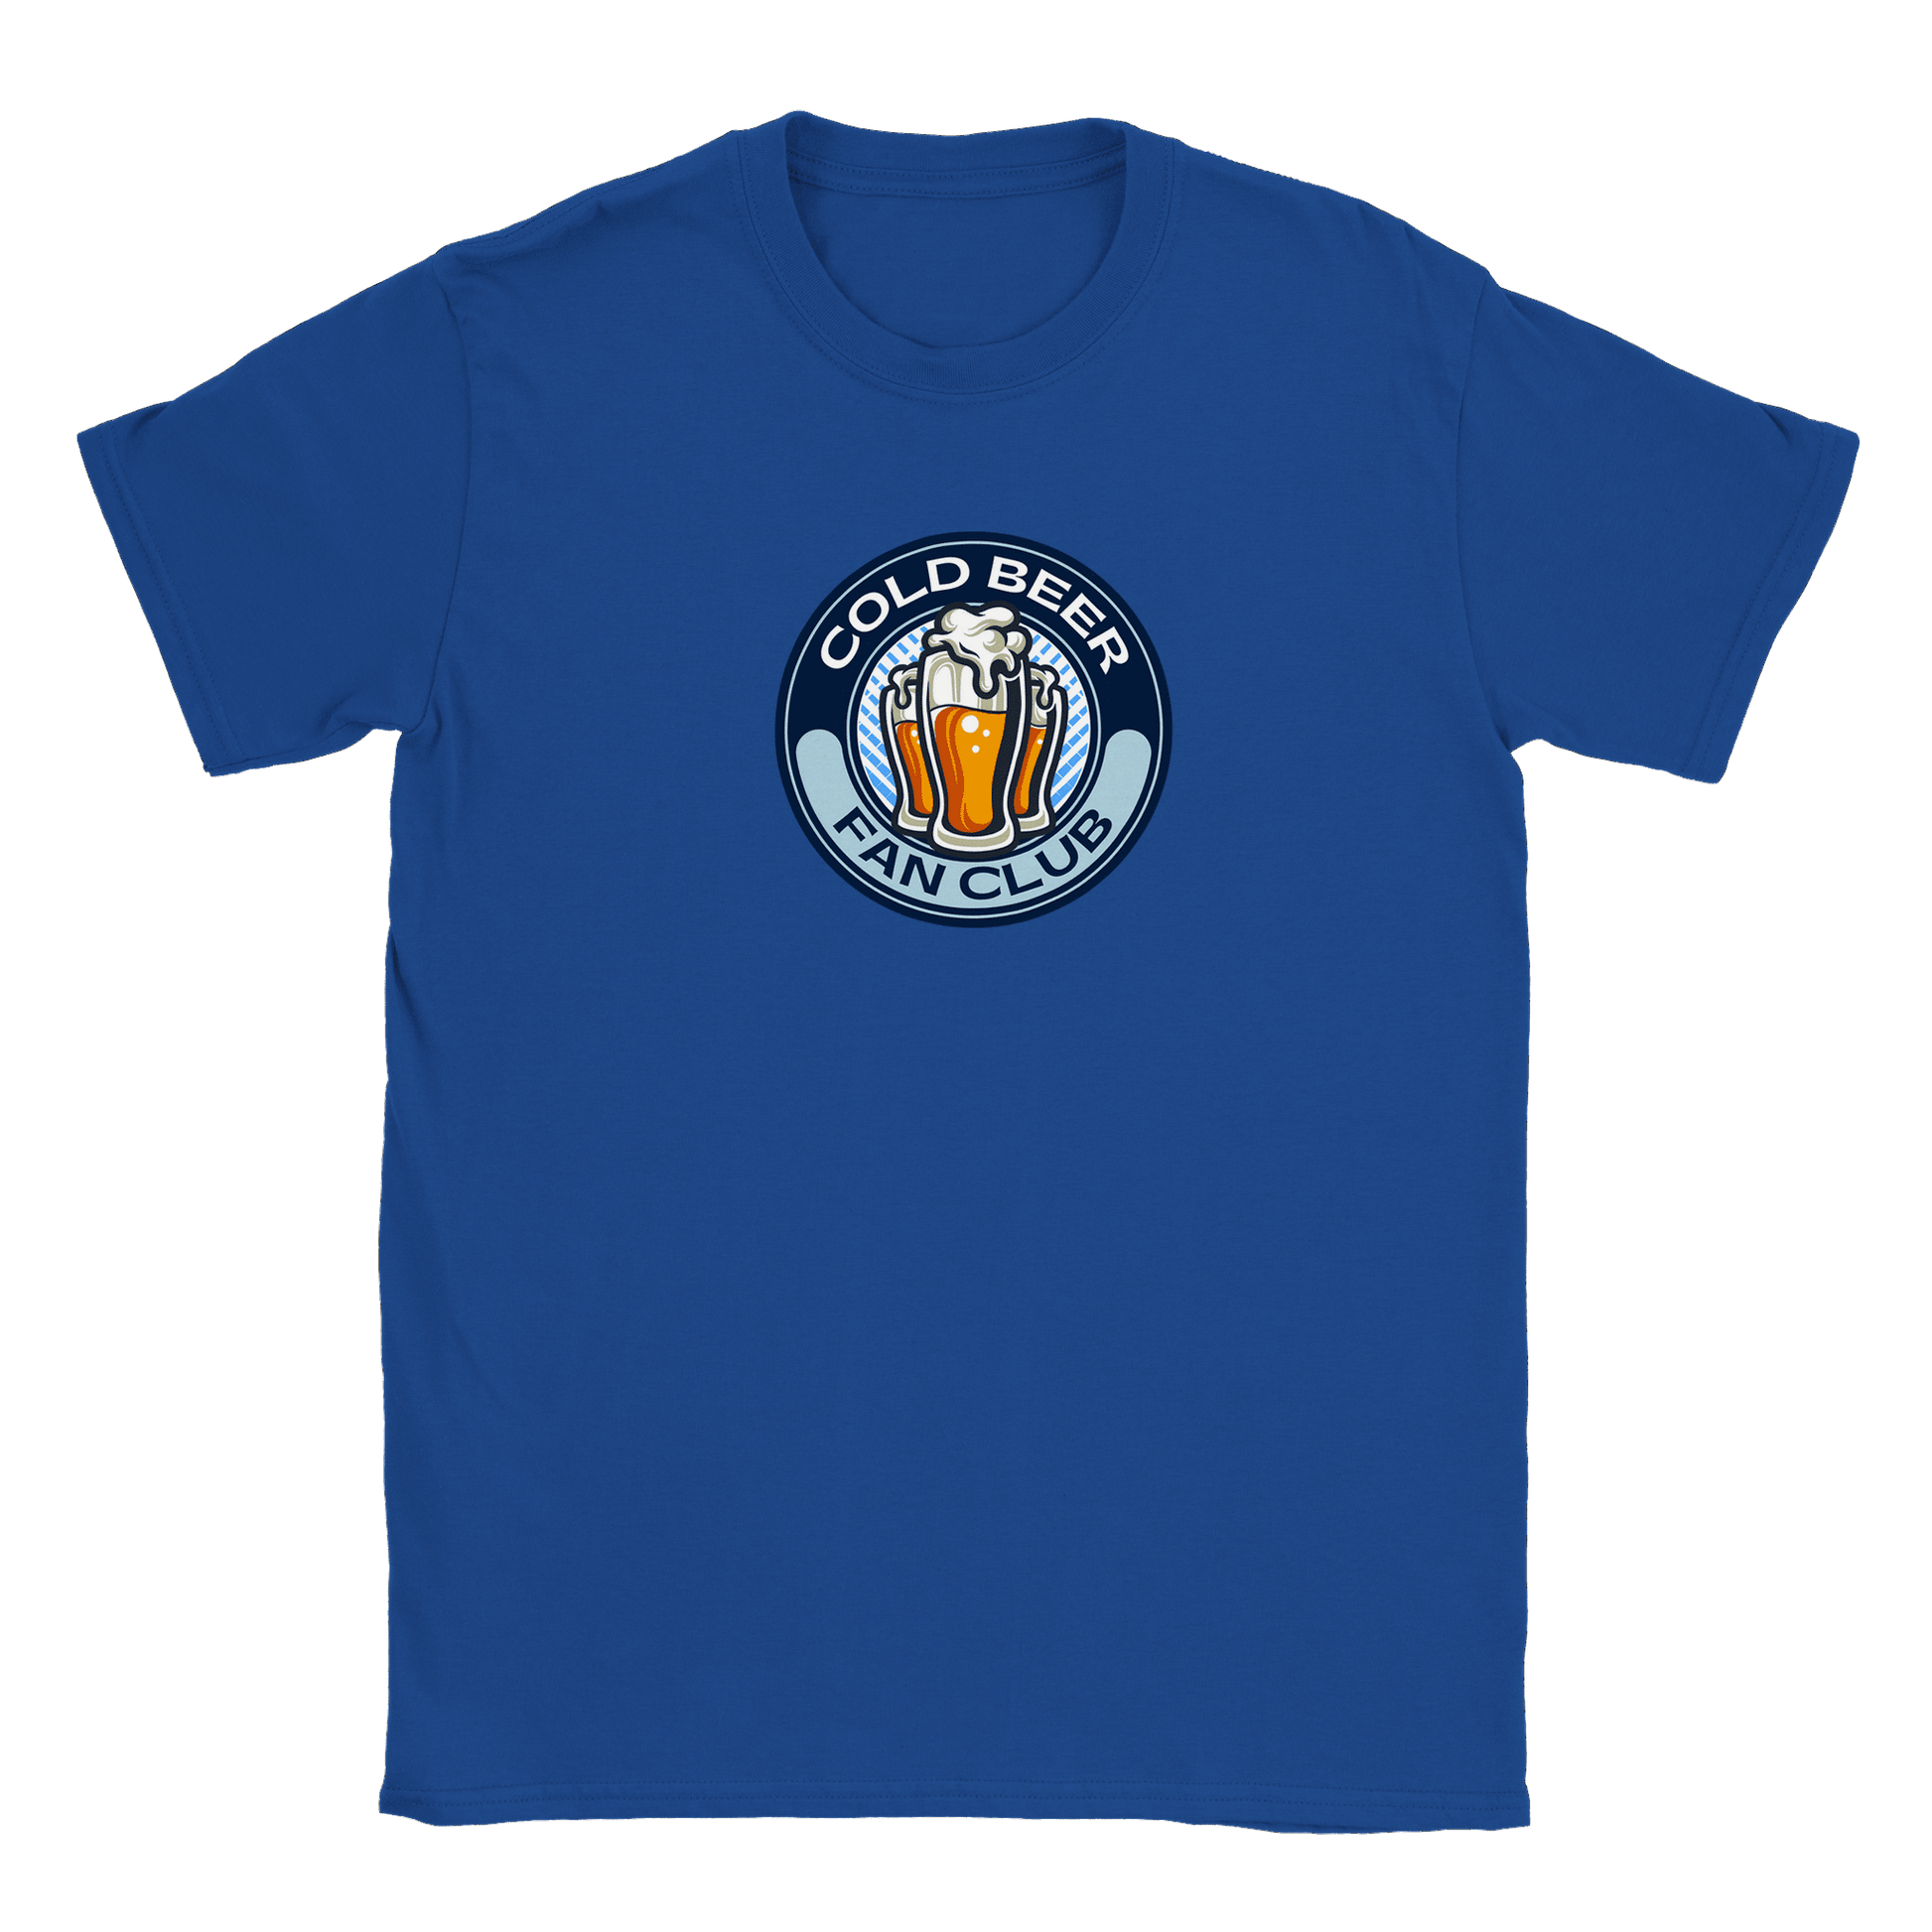 Cold Beer Fan Club - T-shirt Royal